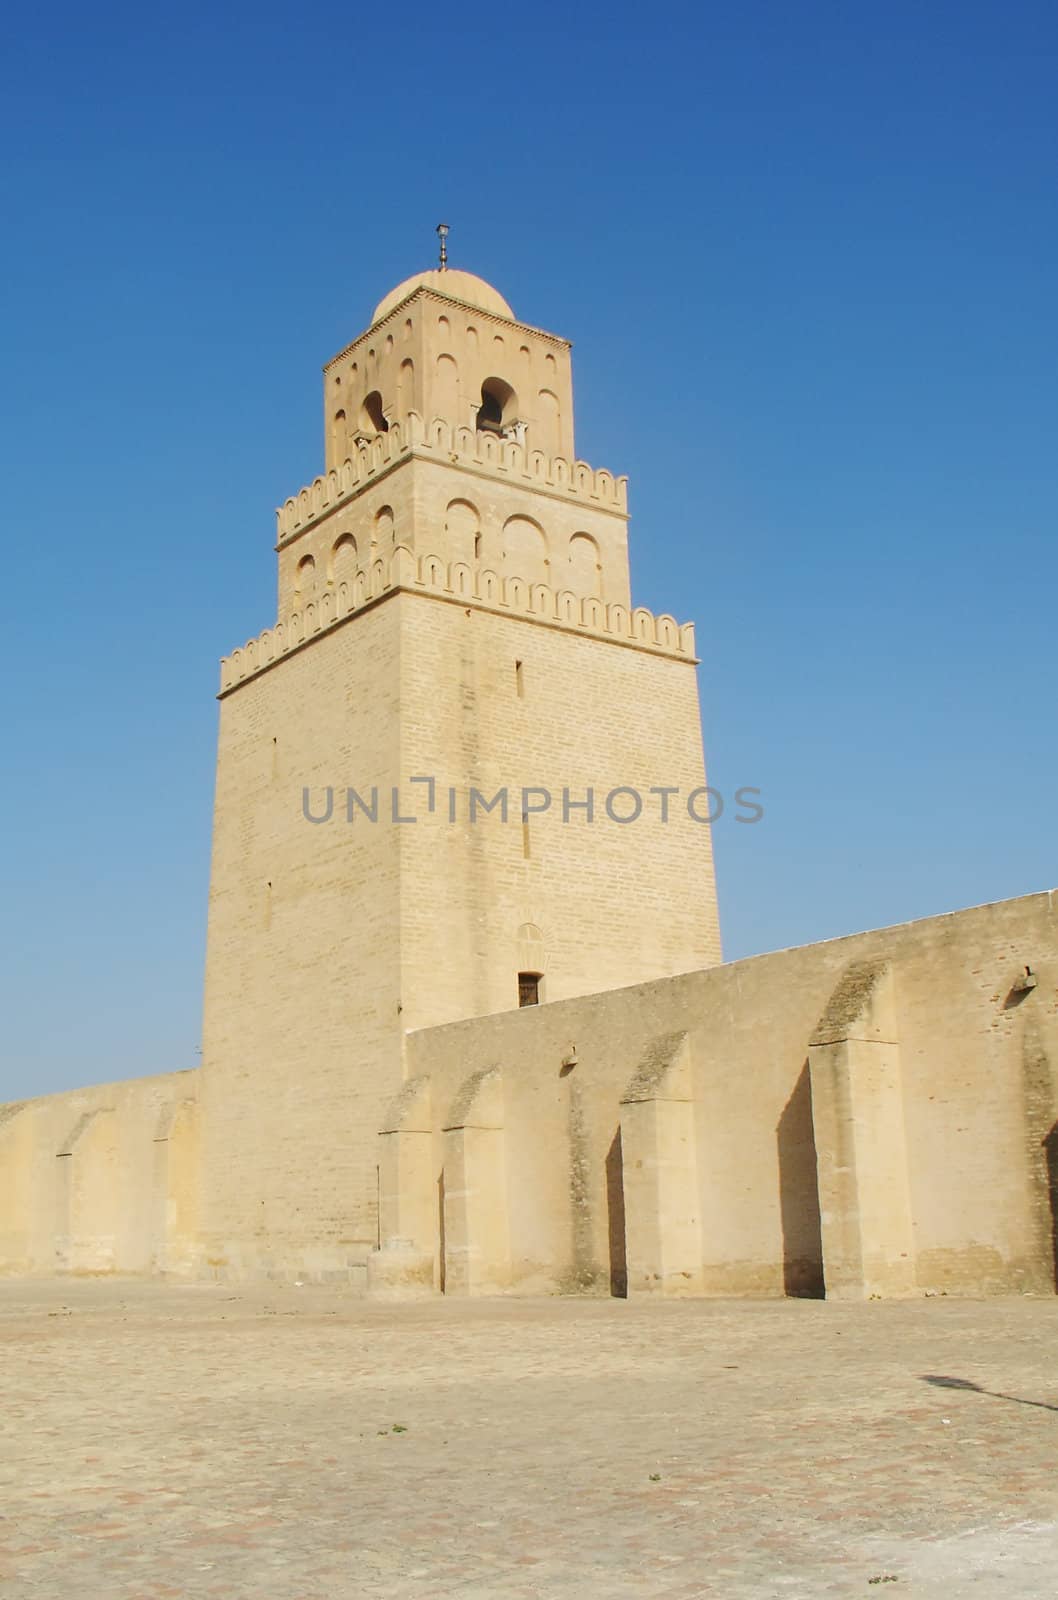 Mosque in Kairouan by Vof